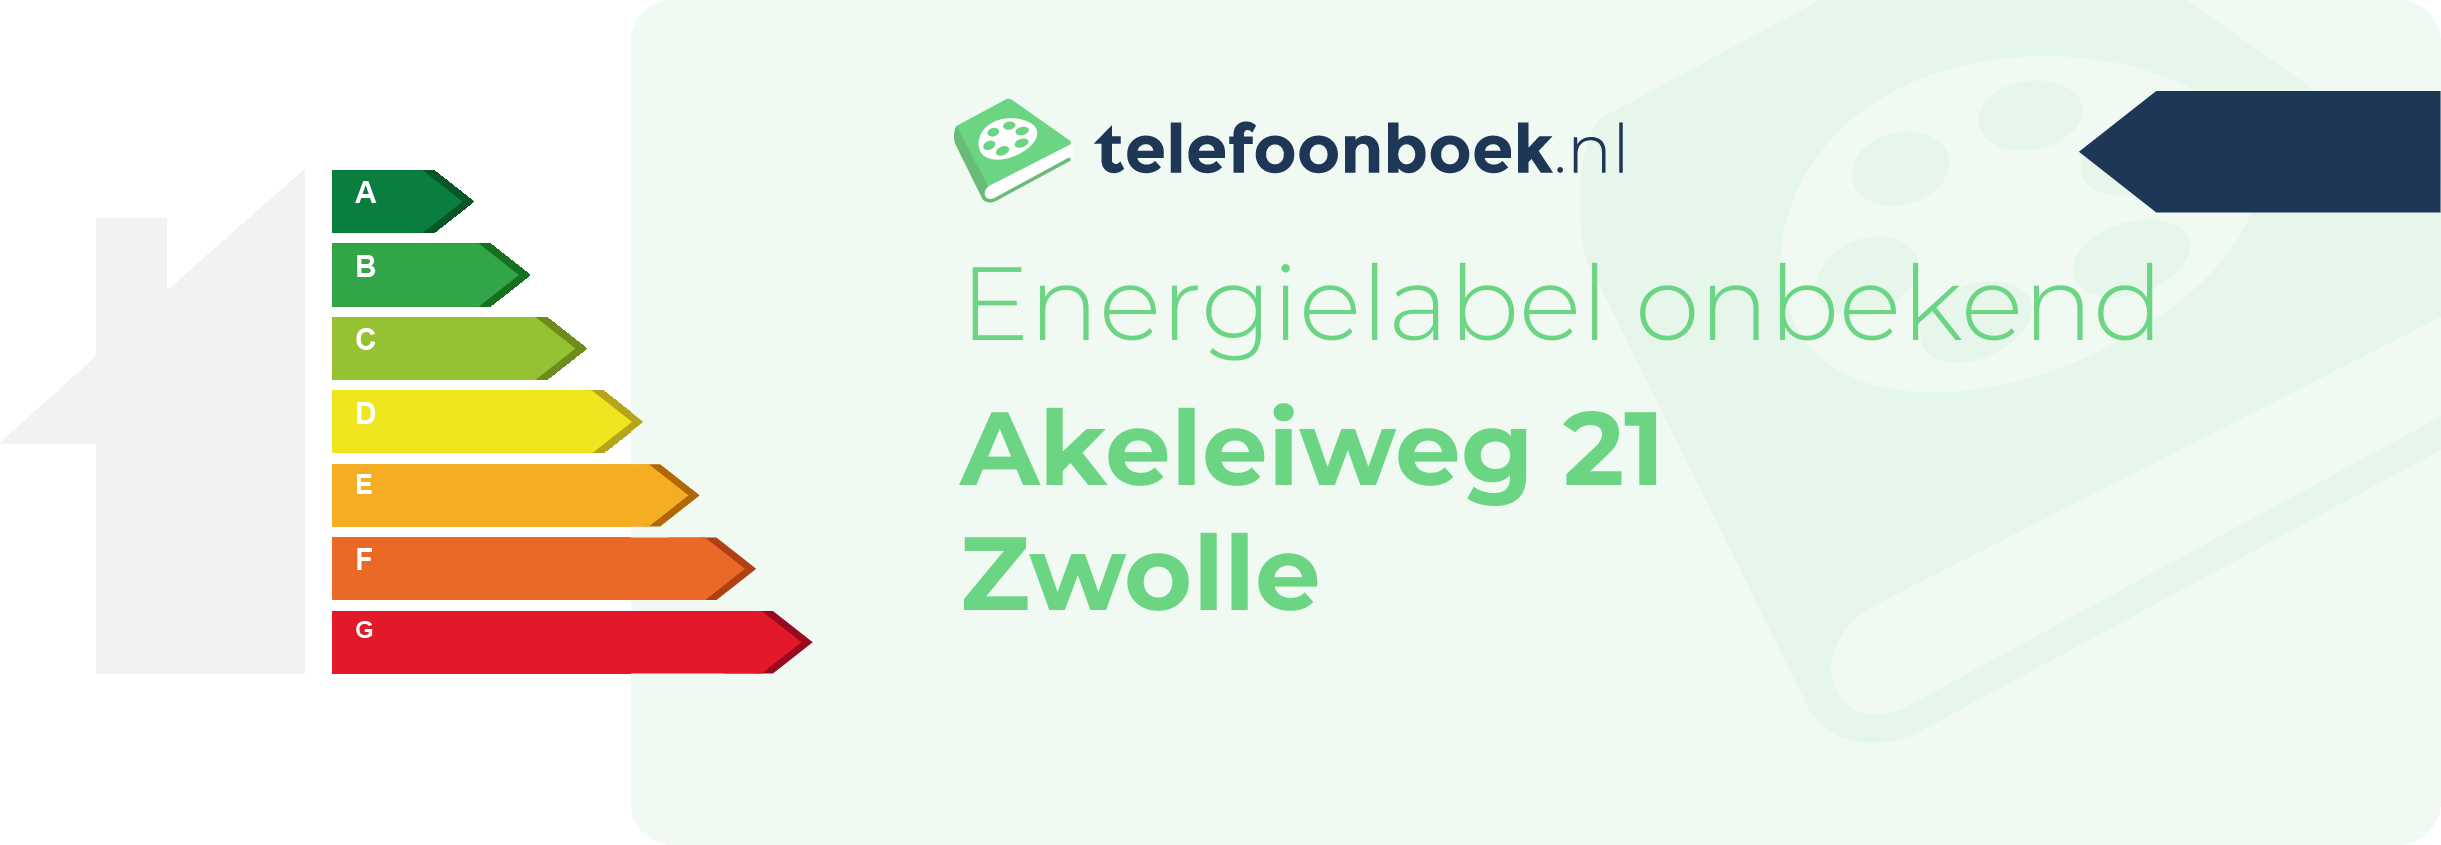 Energielabel Akeleiweg 21 Zwolle